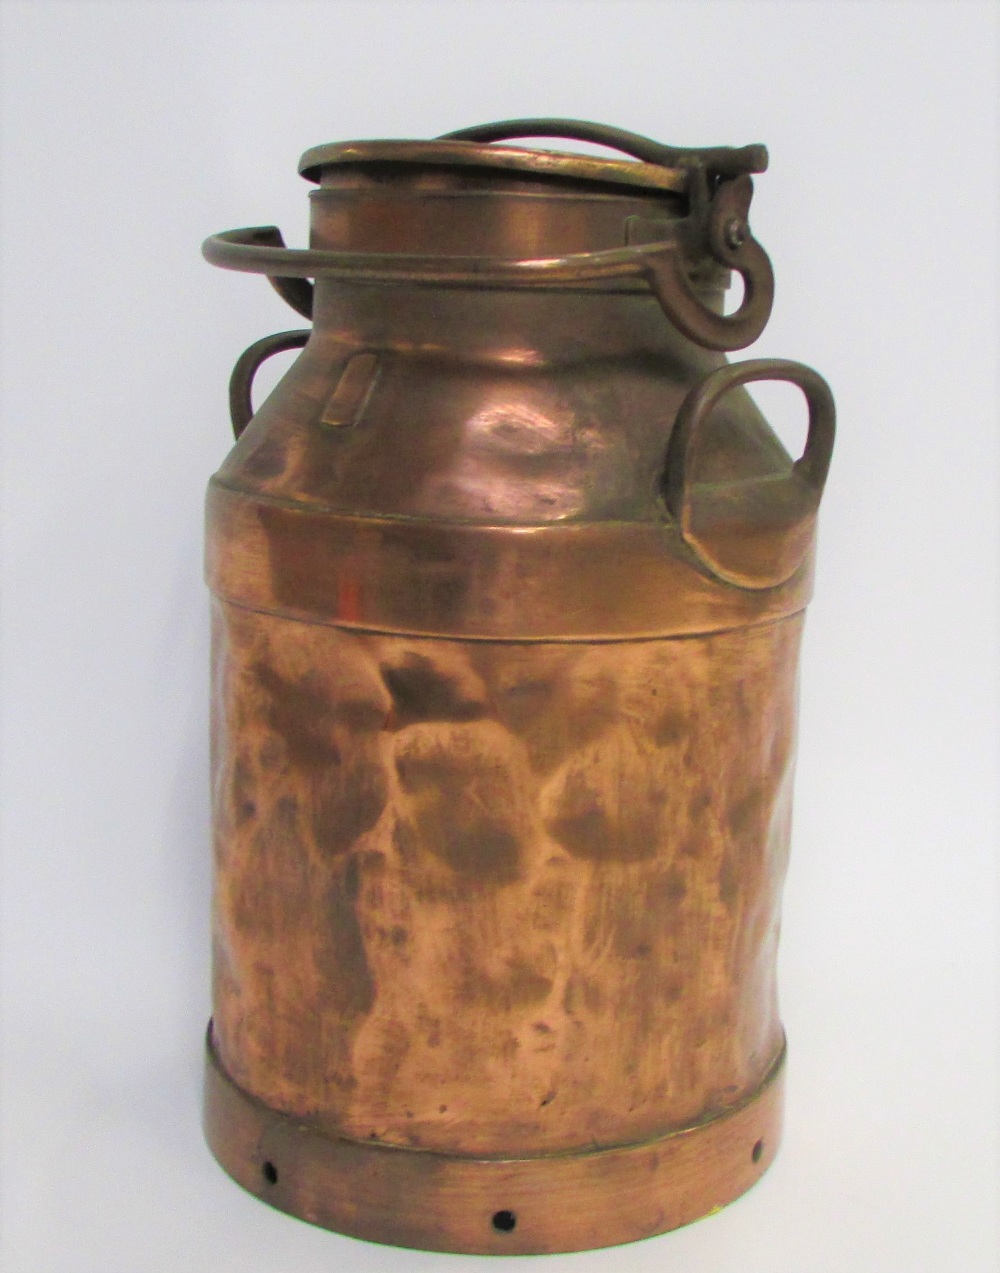 An early 20th century copper milk churn